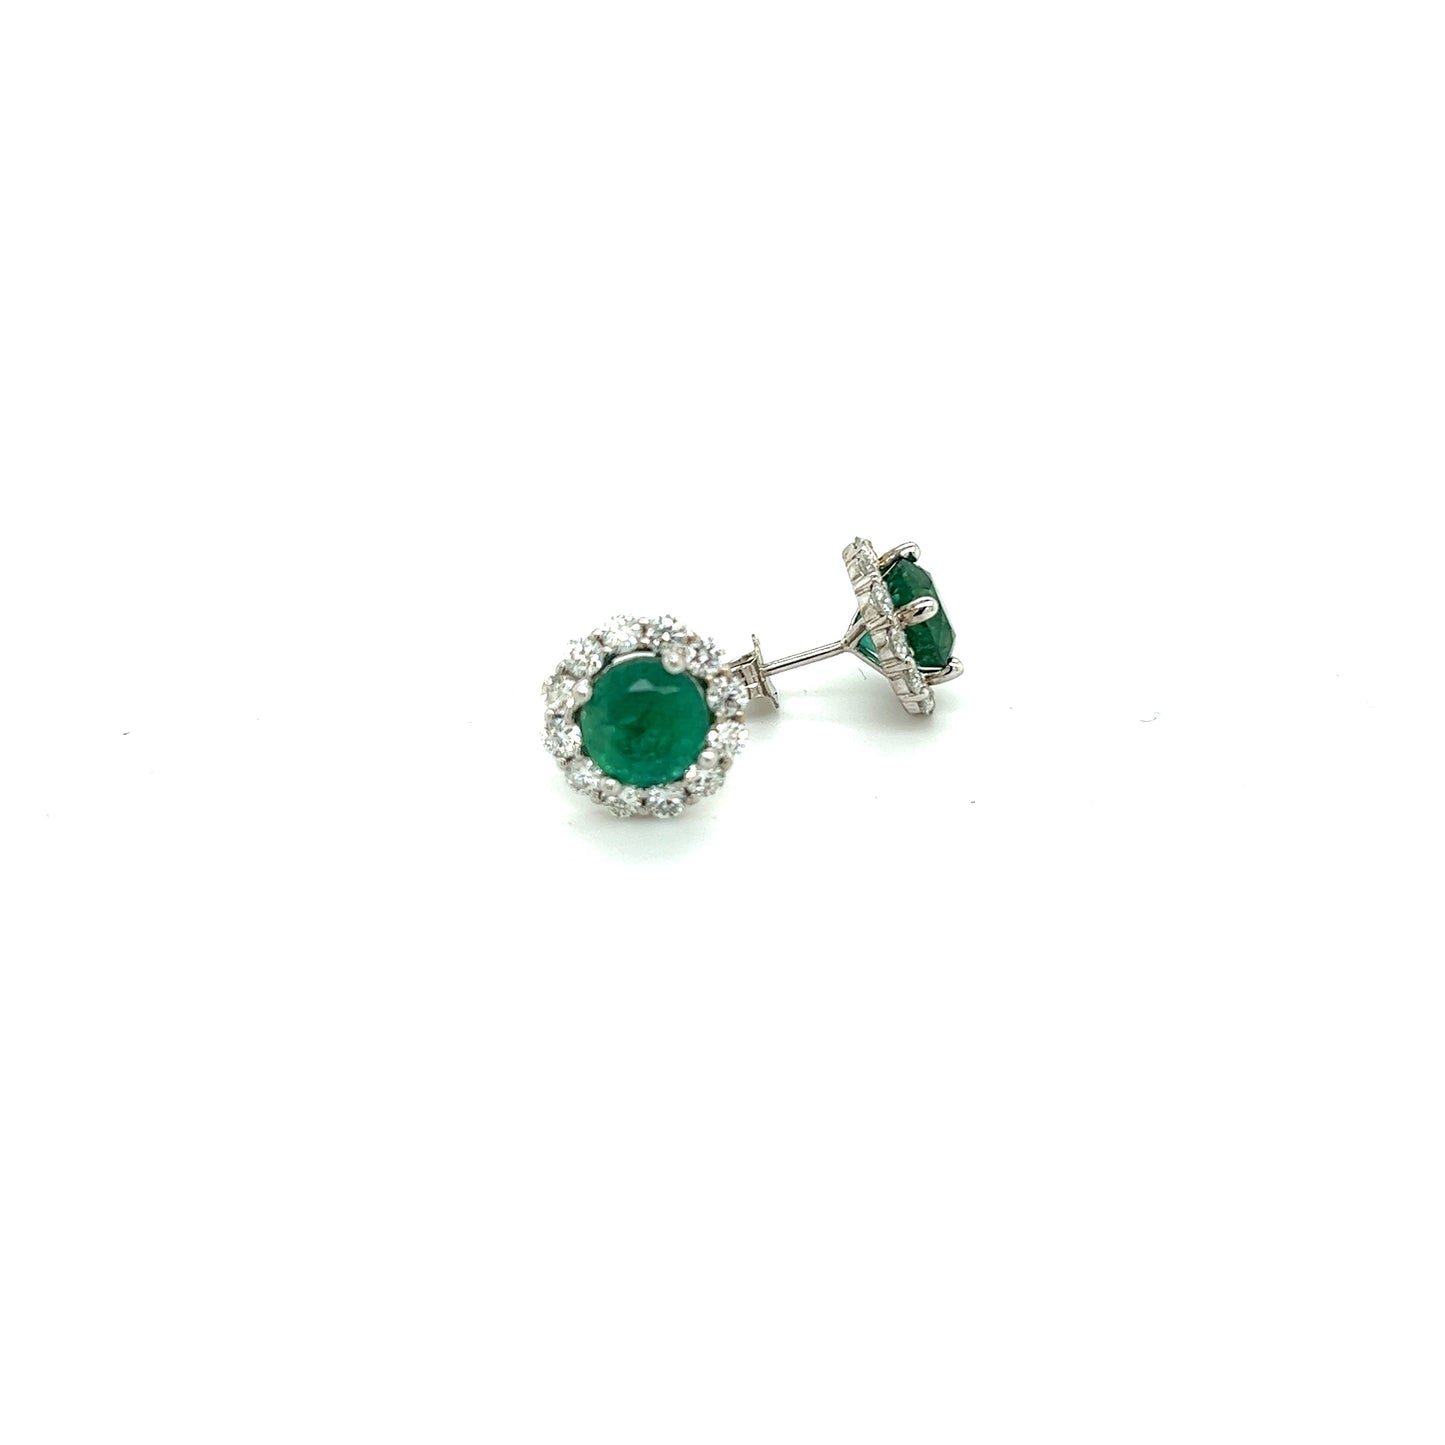 Natural Emerald Diamond Earrings 18k White Gold 3.8 TCW Certified $7,950 210746 - Certified Fine Jewelry